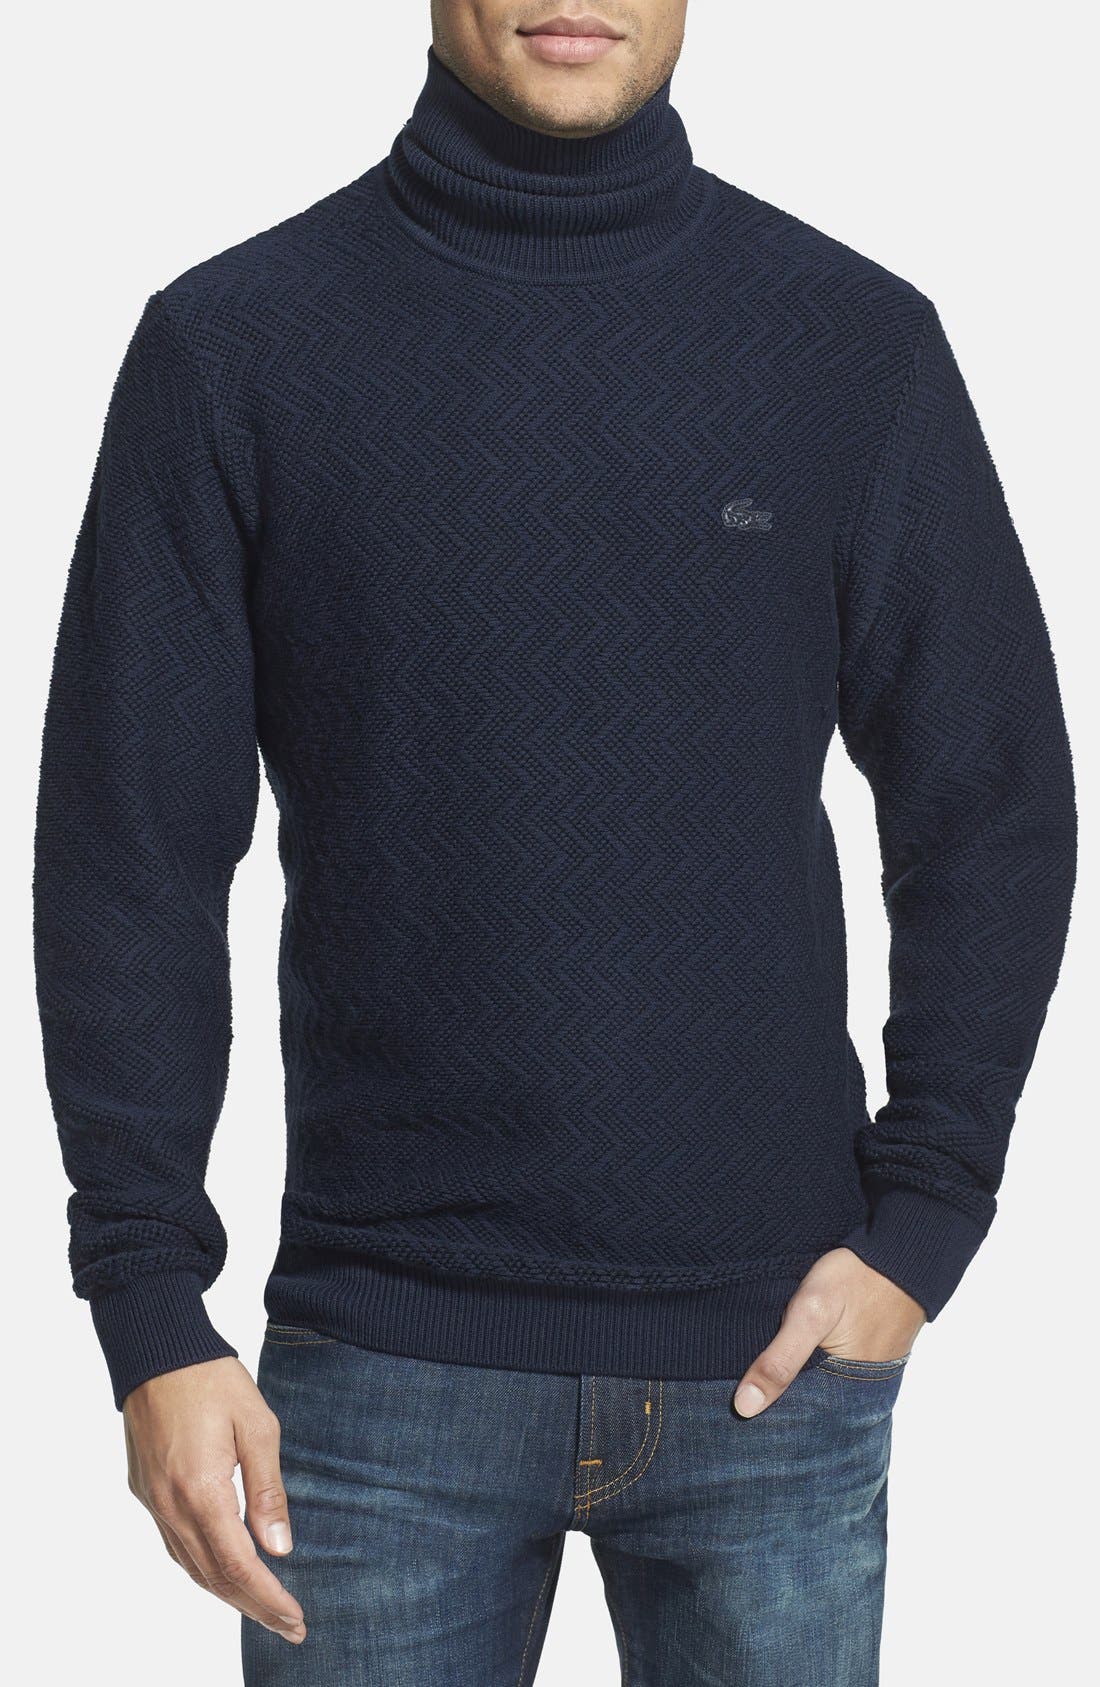 Lacoste Texture Knit Turtleneck Sweater 